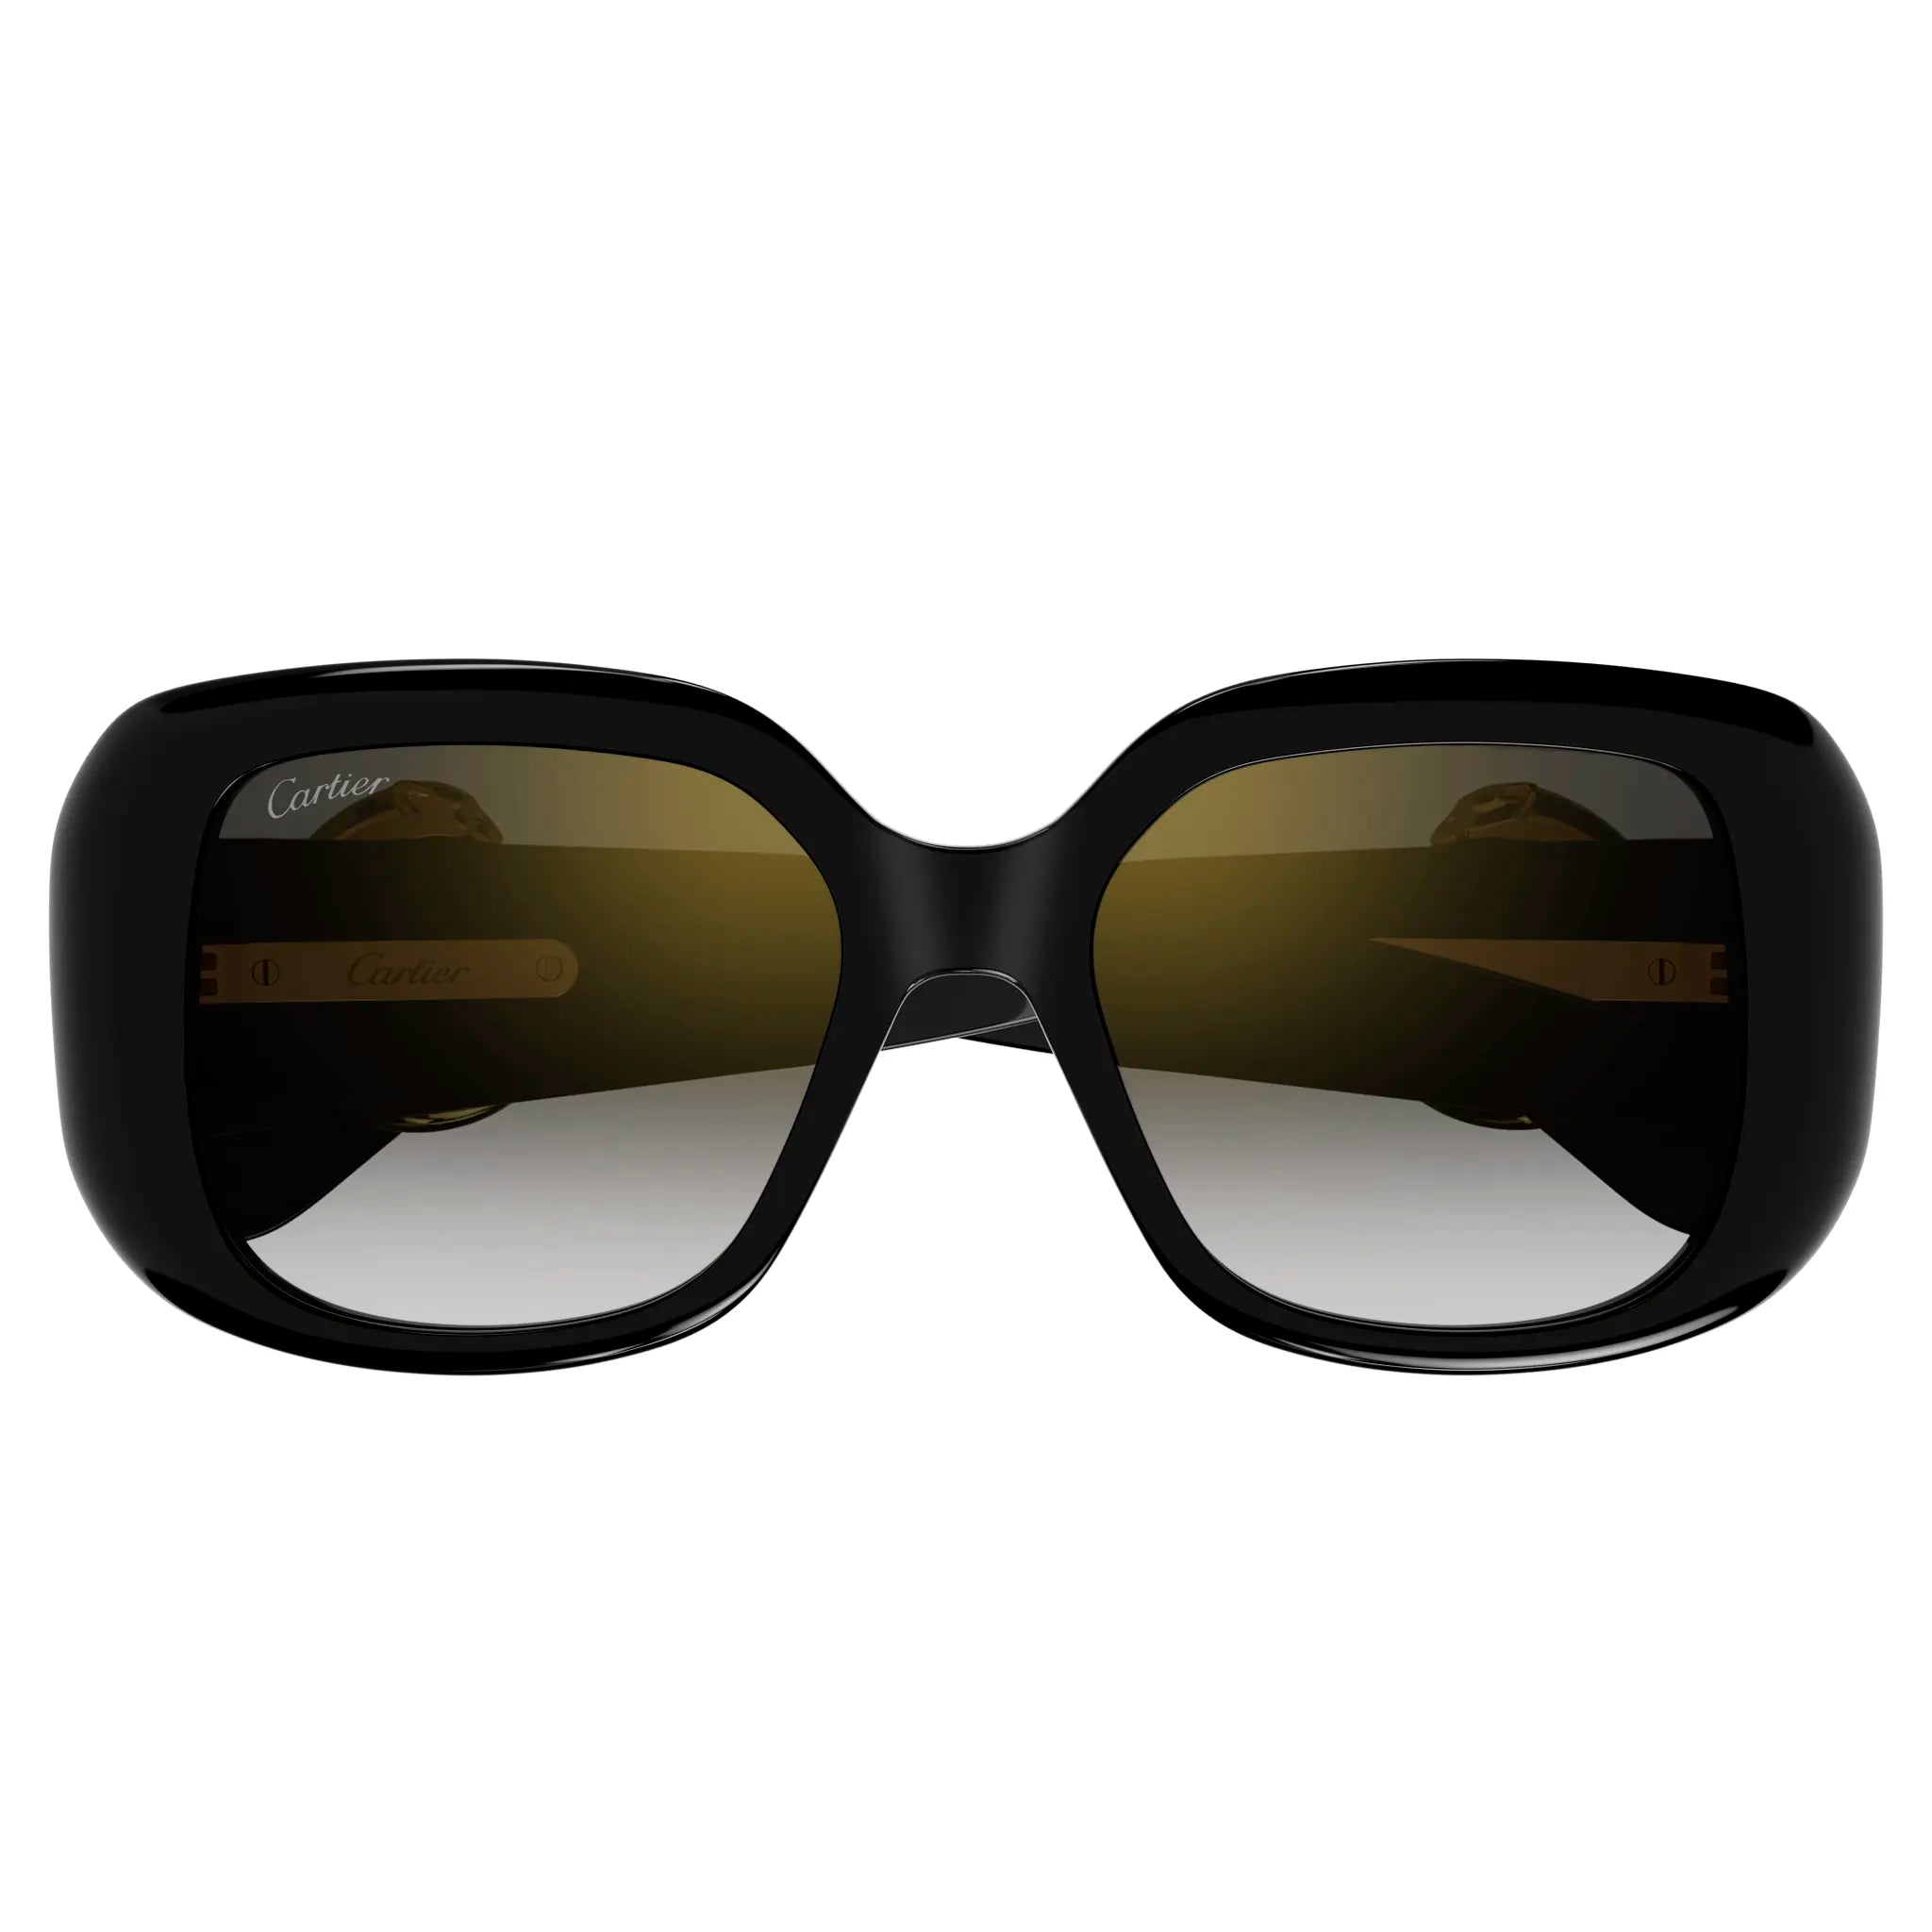 Folded view of Cartier Eyewear CT0471S-001 Black Grey Sunglasses